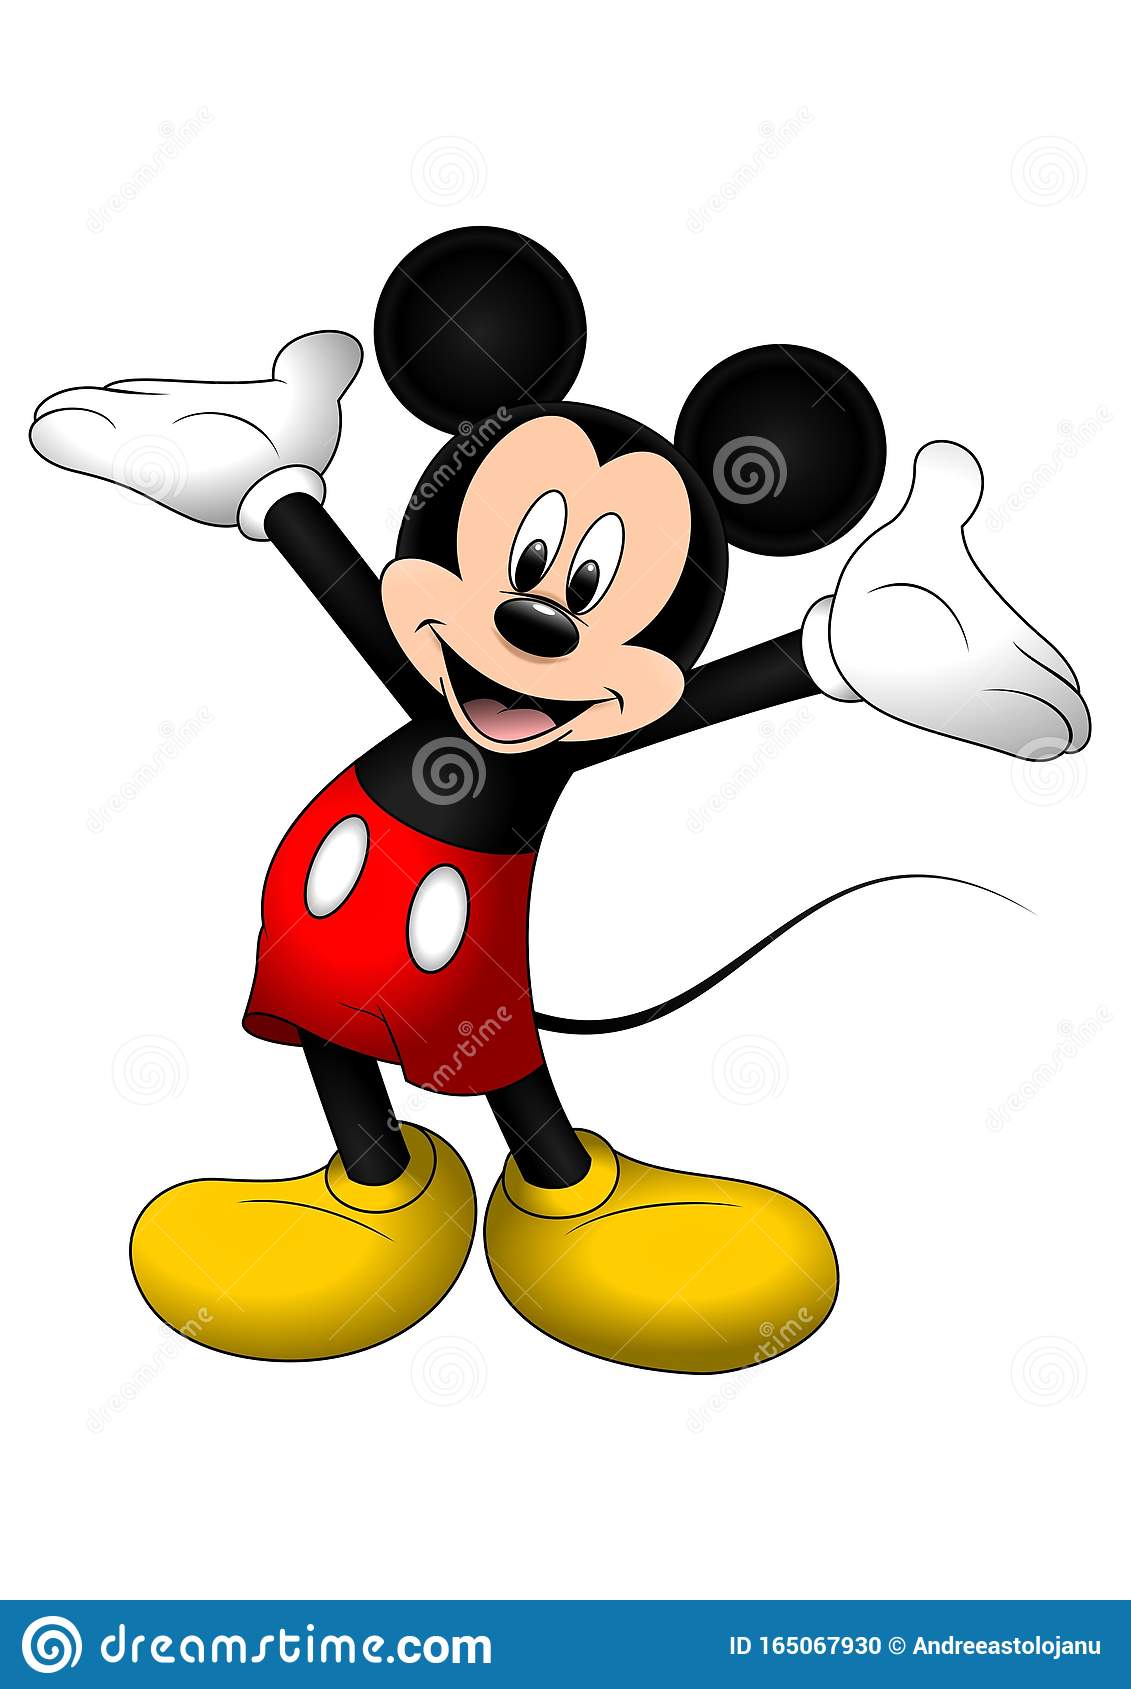 Mickey Birthday Images